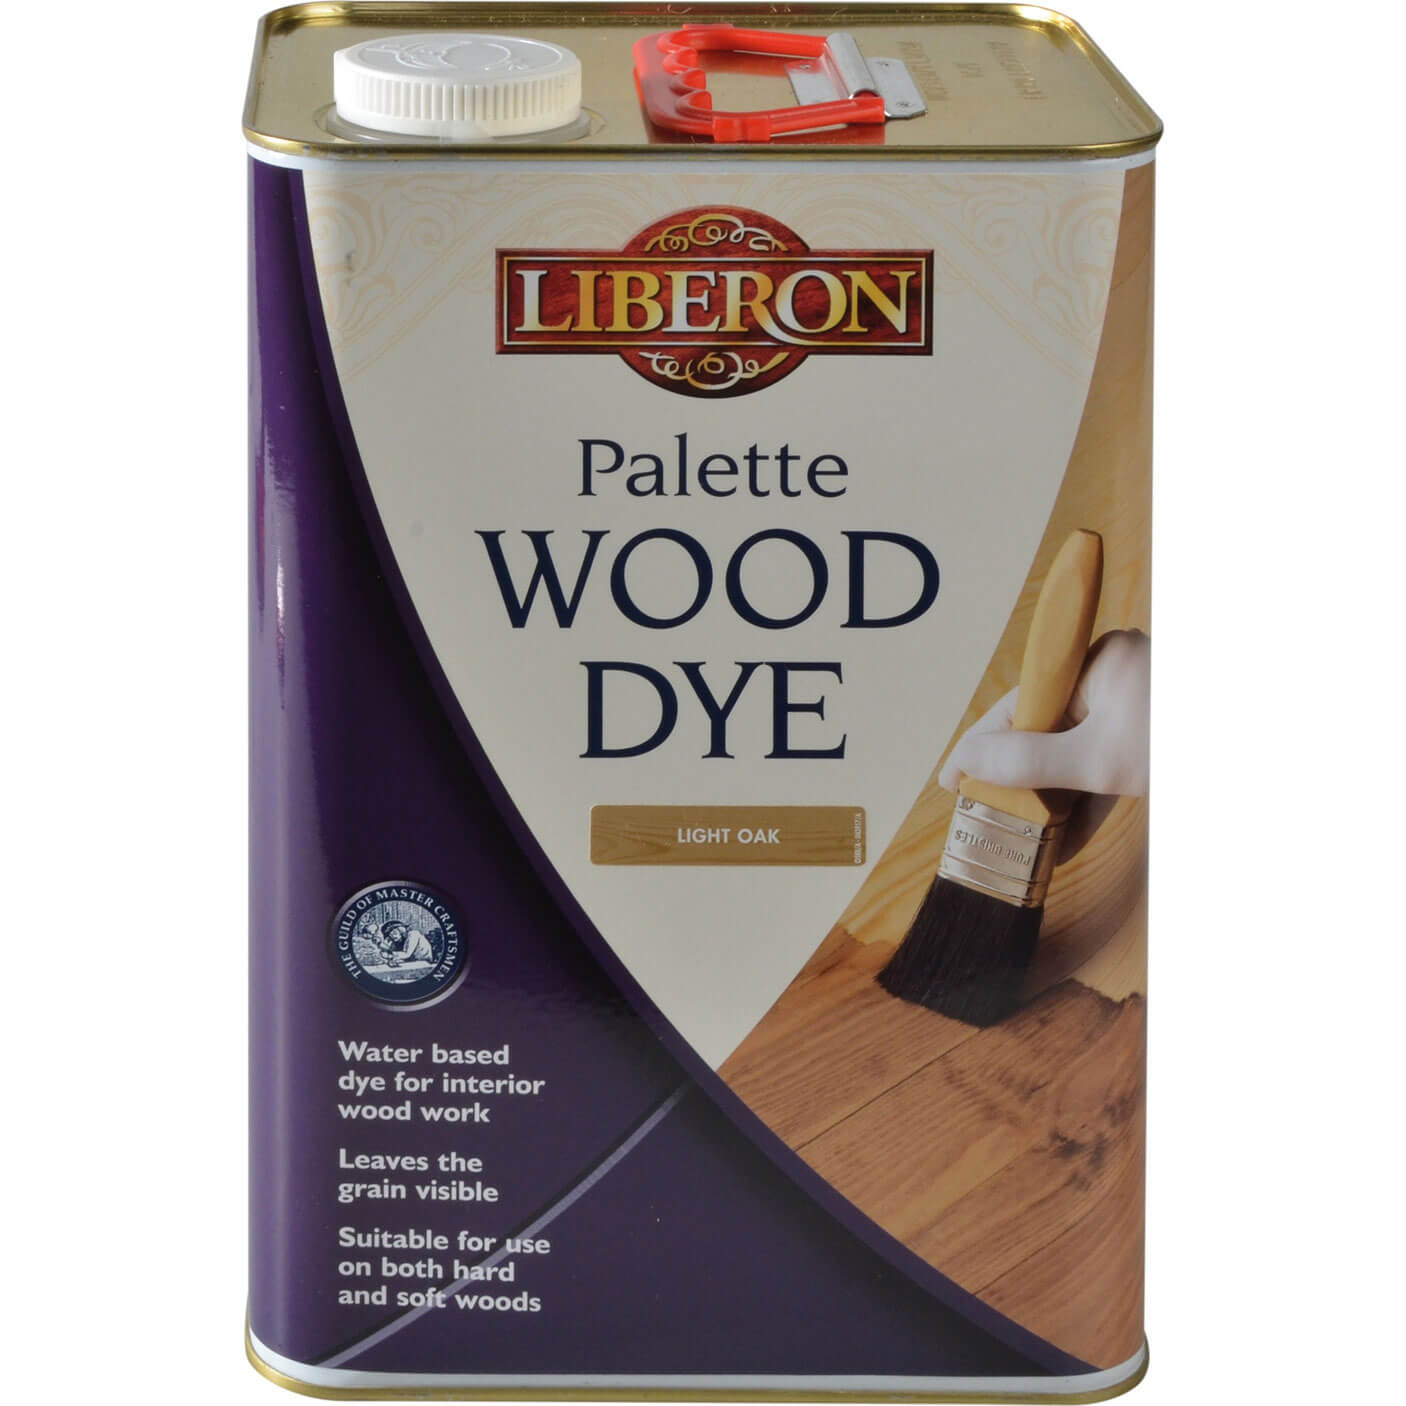 Photos - Varnish Liberon Palette Wood Dye Light Oak 5l 